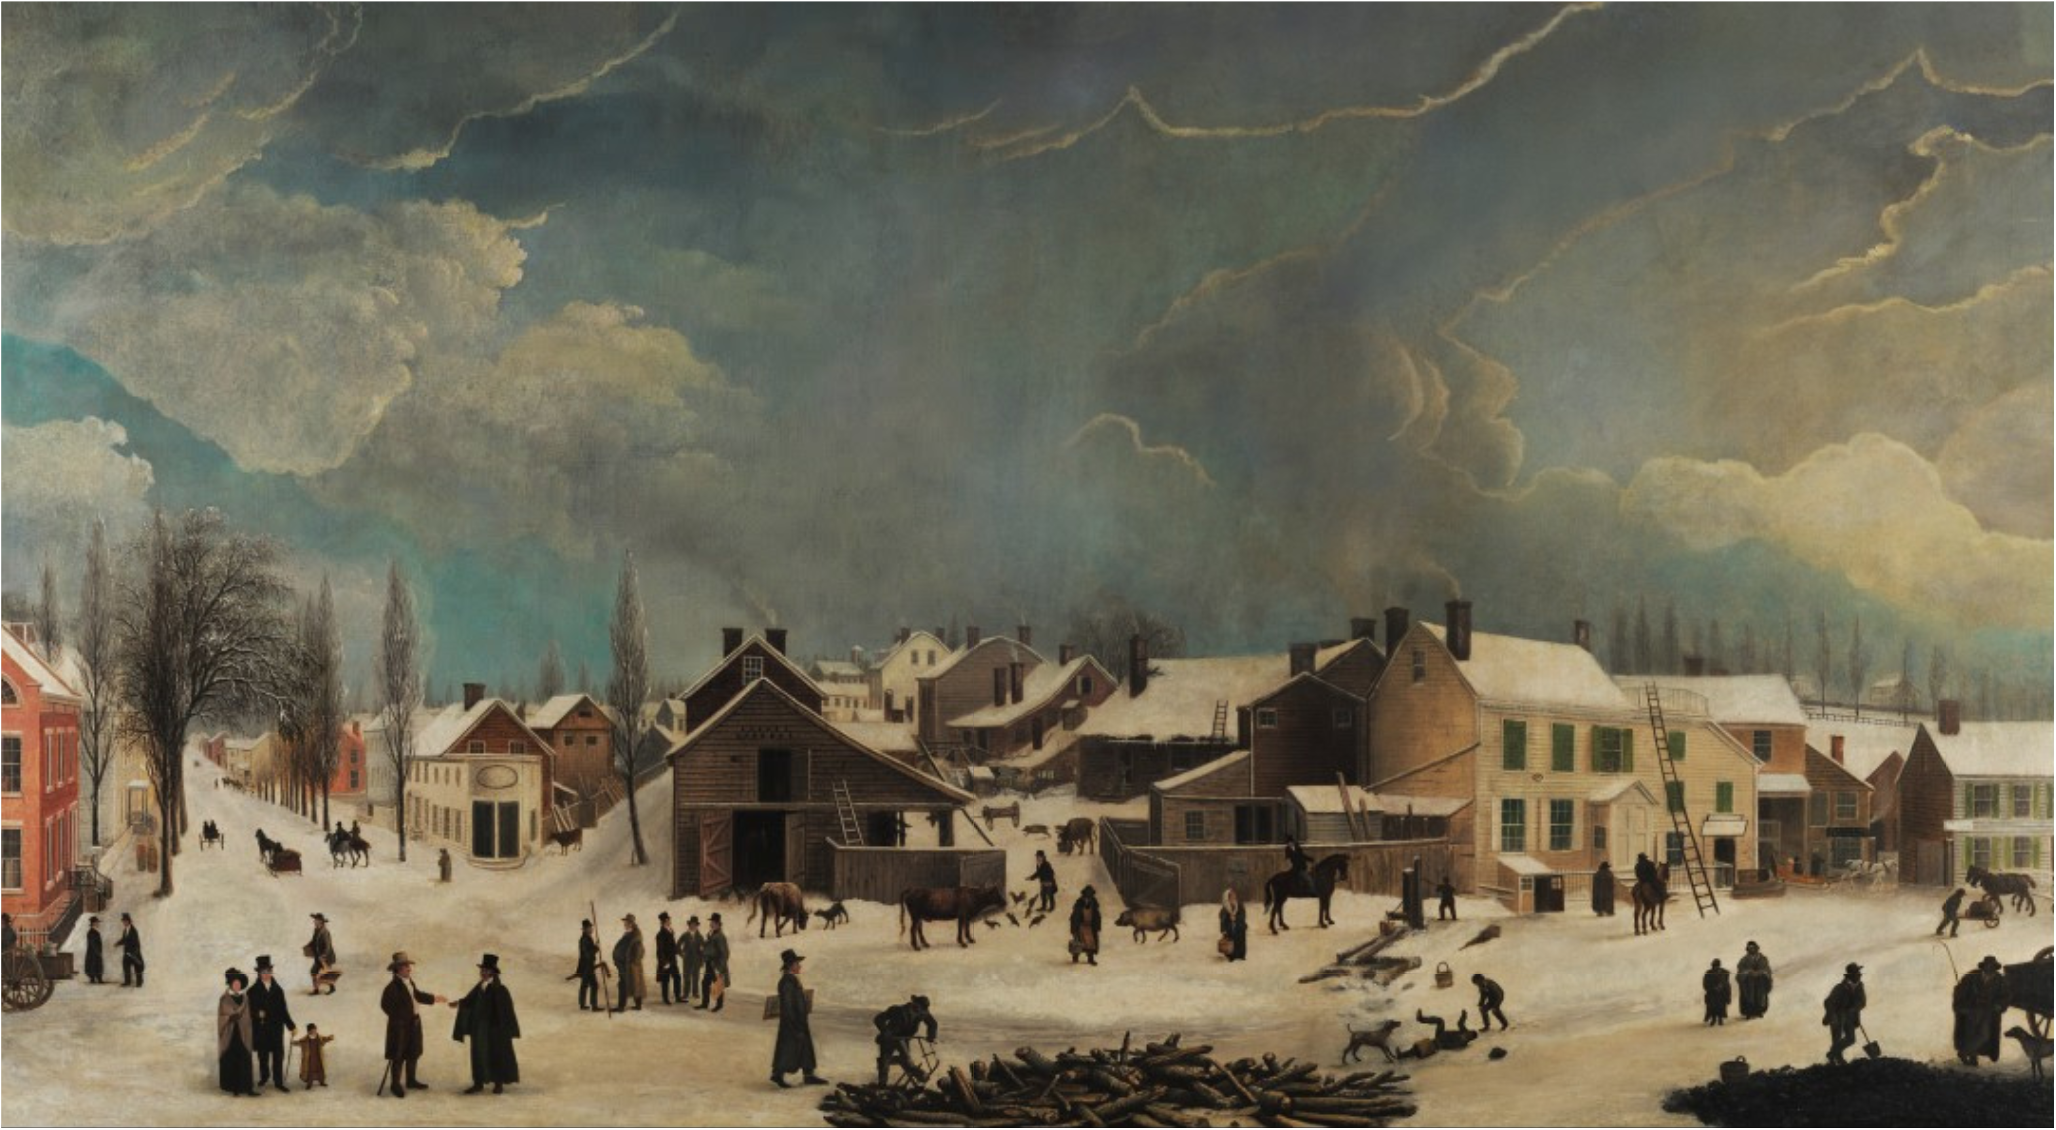 Winter Scene in Brooklyn by Francis Guy - 1820 - 147.3 x 269.2 cm Crystal Bridges Museum of American Art